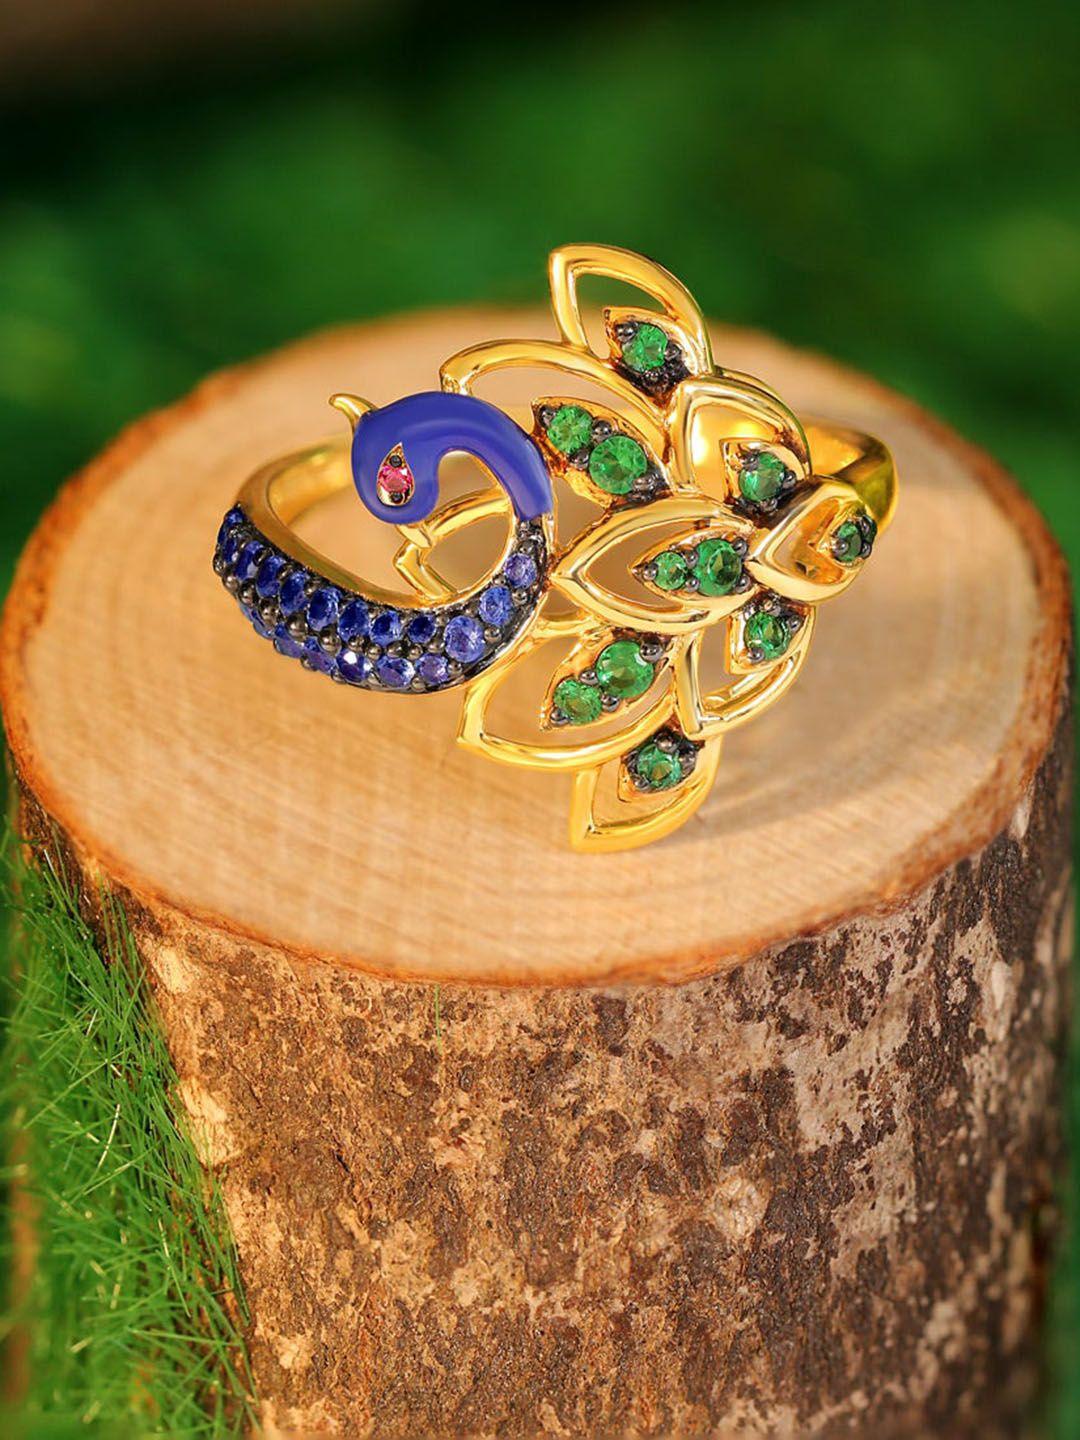 candere a kalyan jewellers company 18kt bis hallmark gold gemstone studded ring-3.62gm